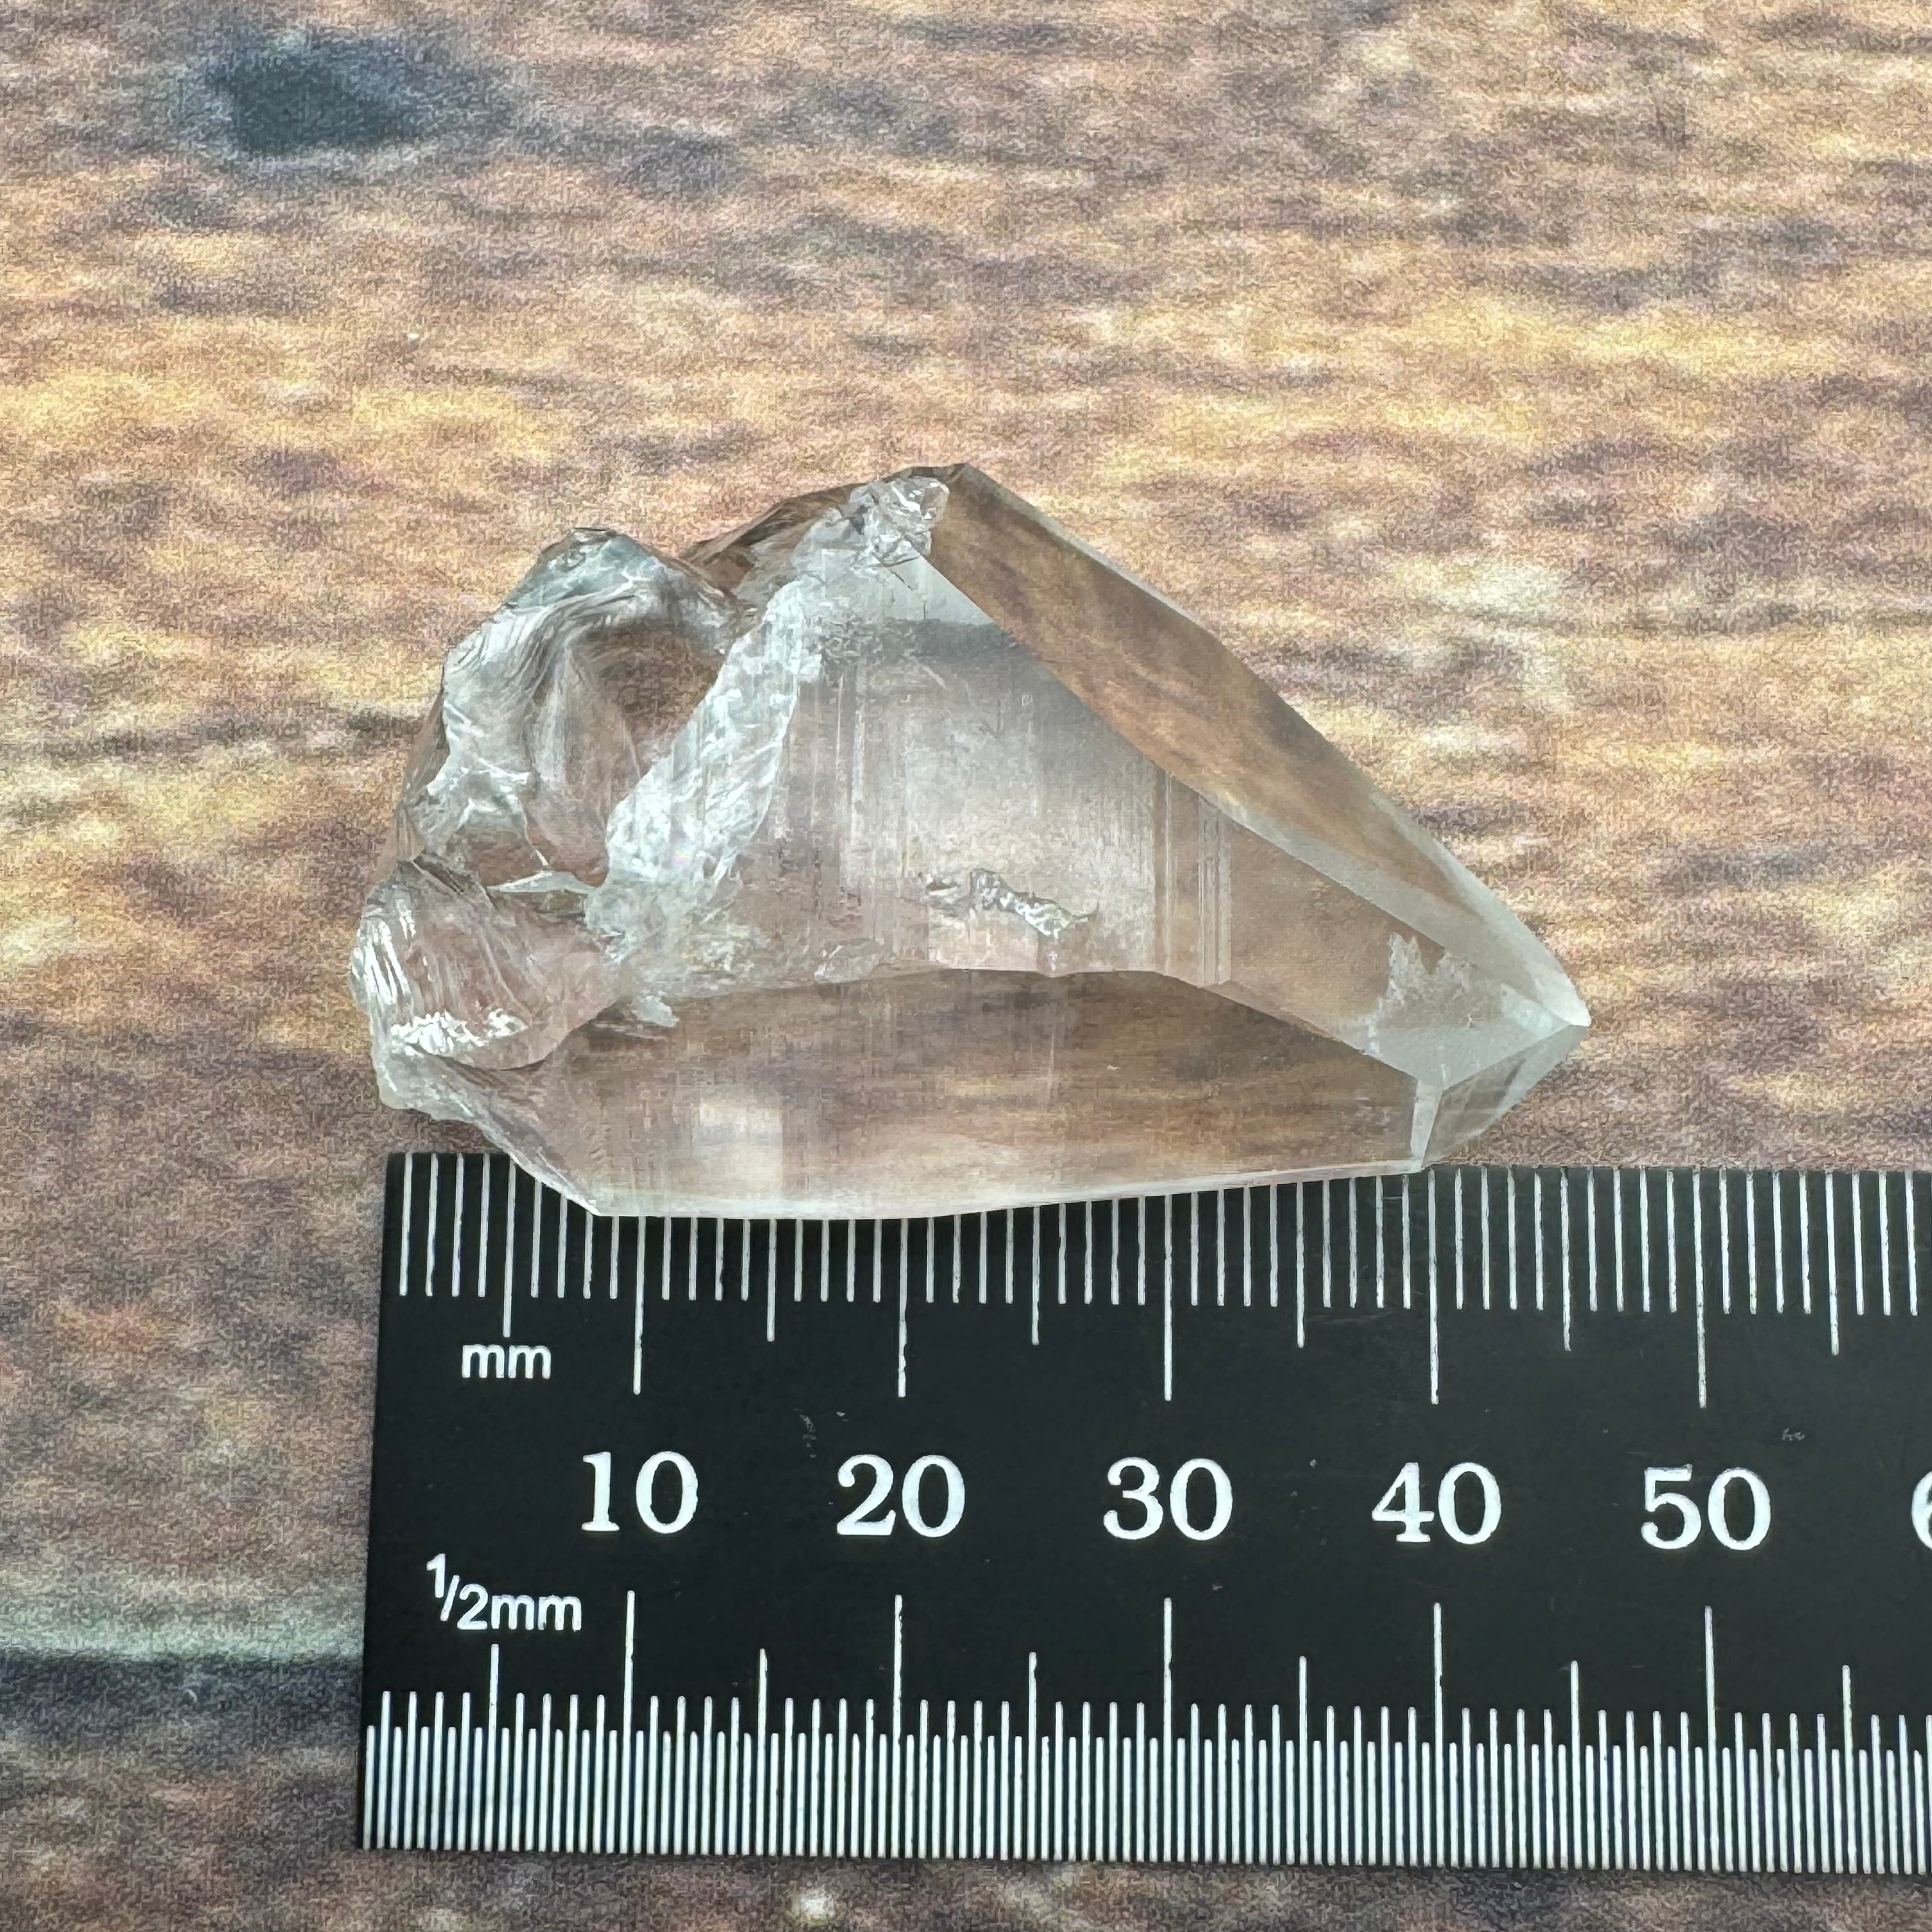 Colombian Quartz Crystal - 026